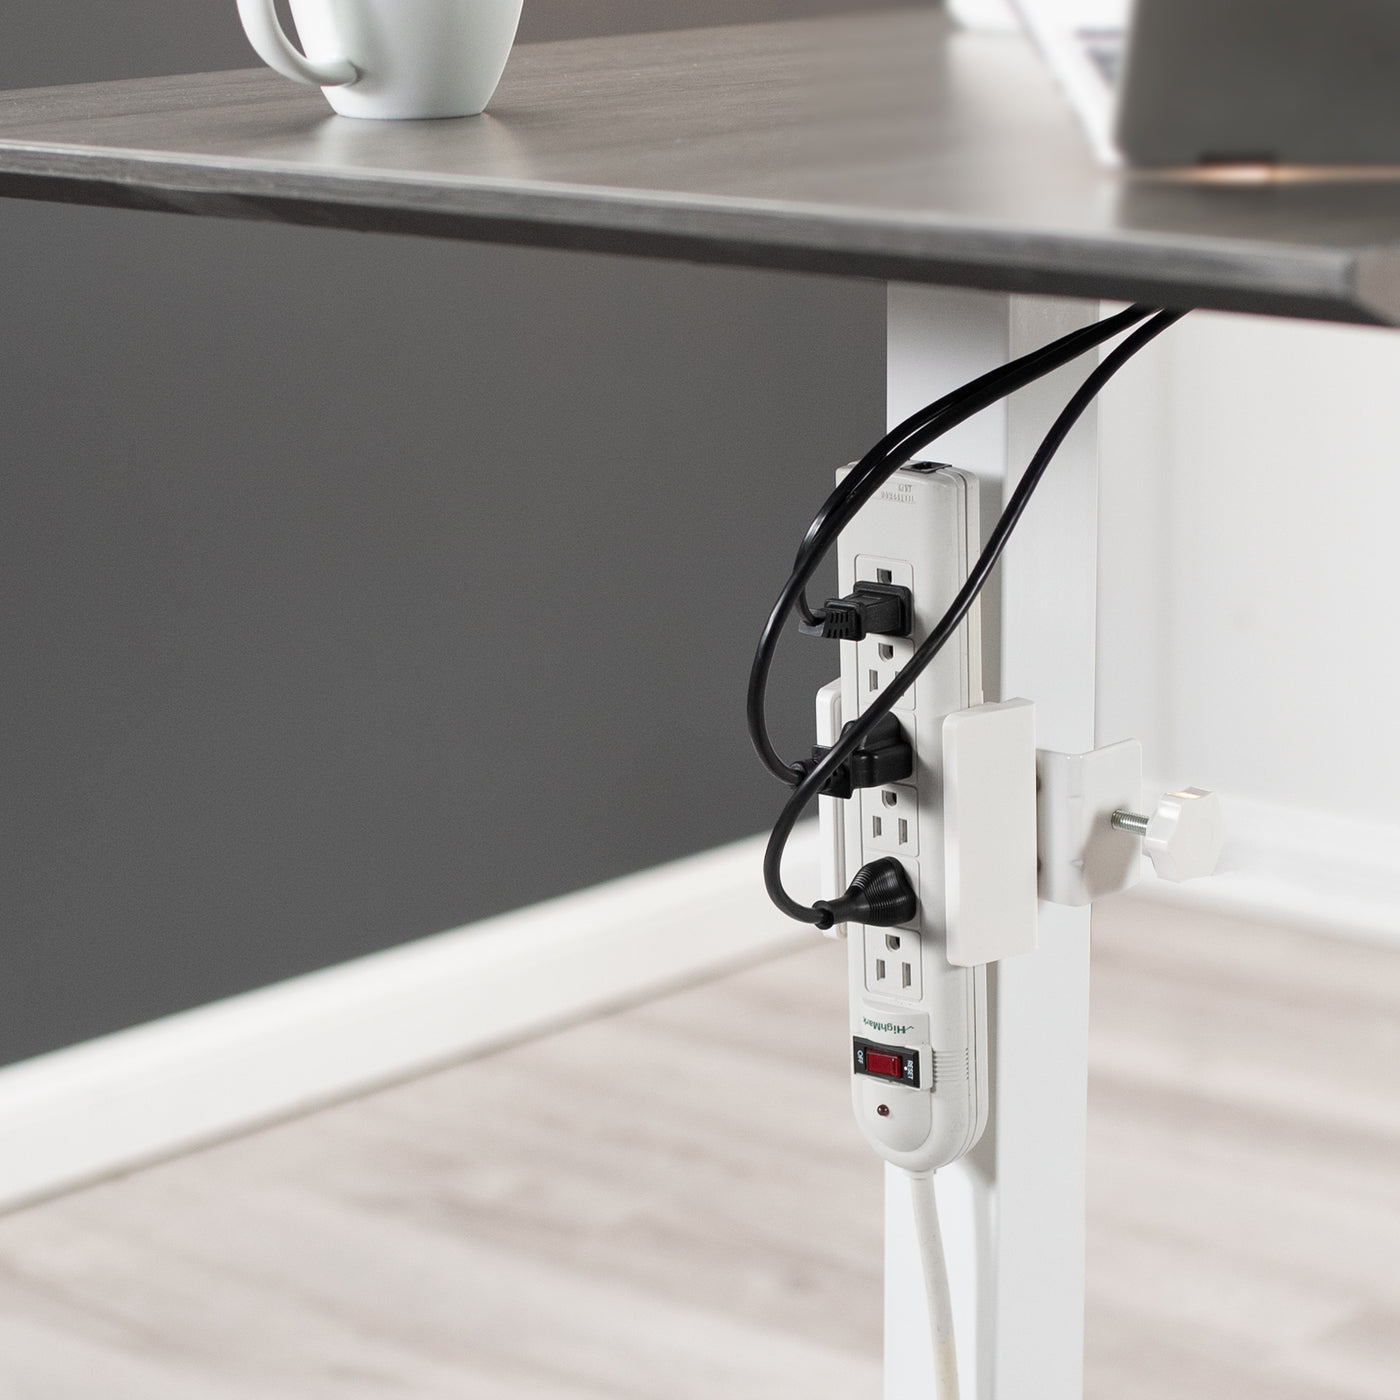 Desk leg with C-clamp under desk power strip holder.